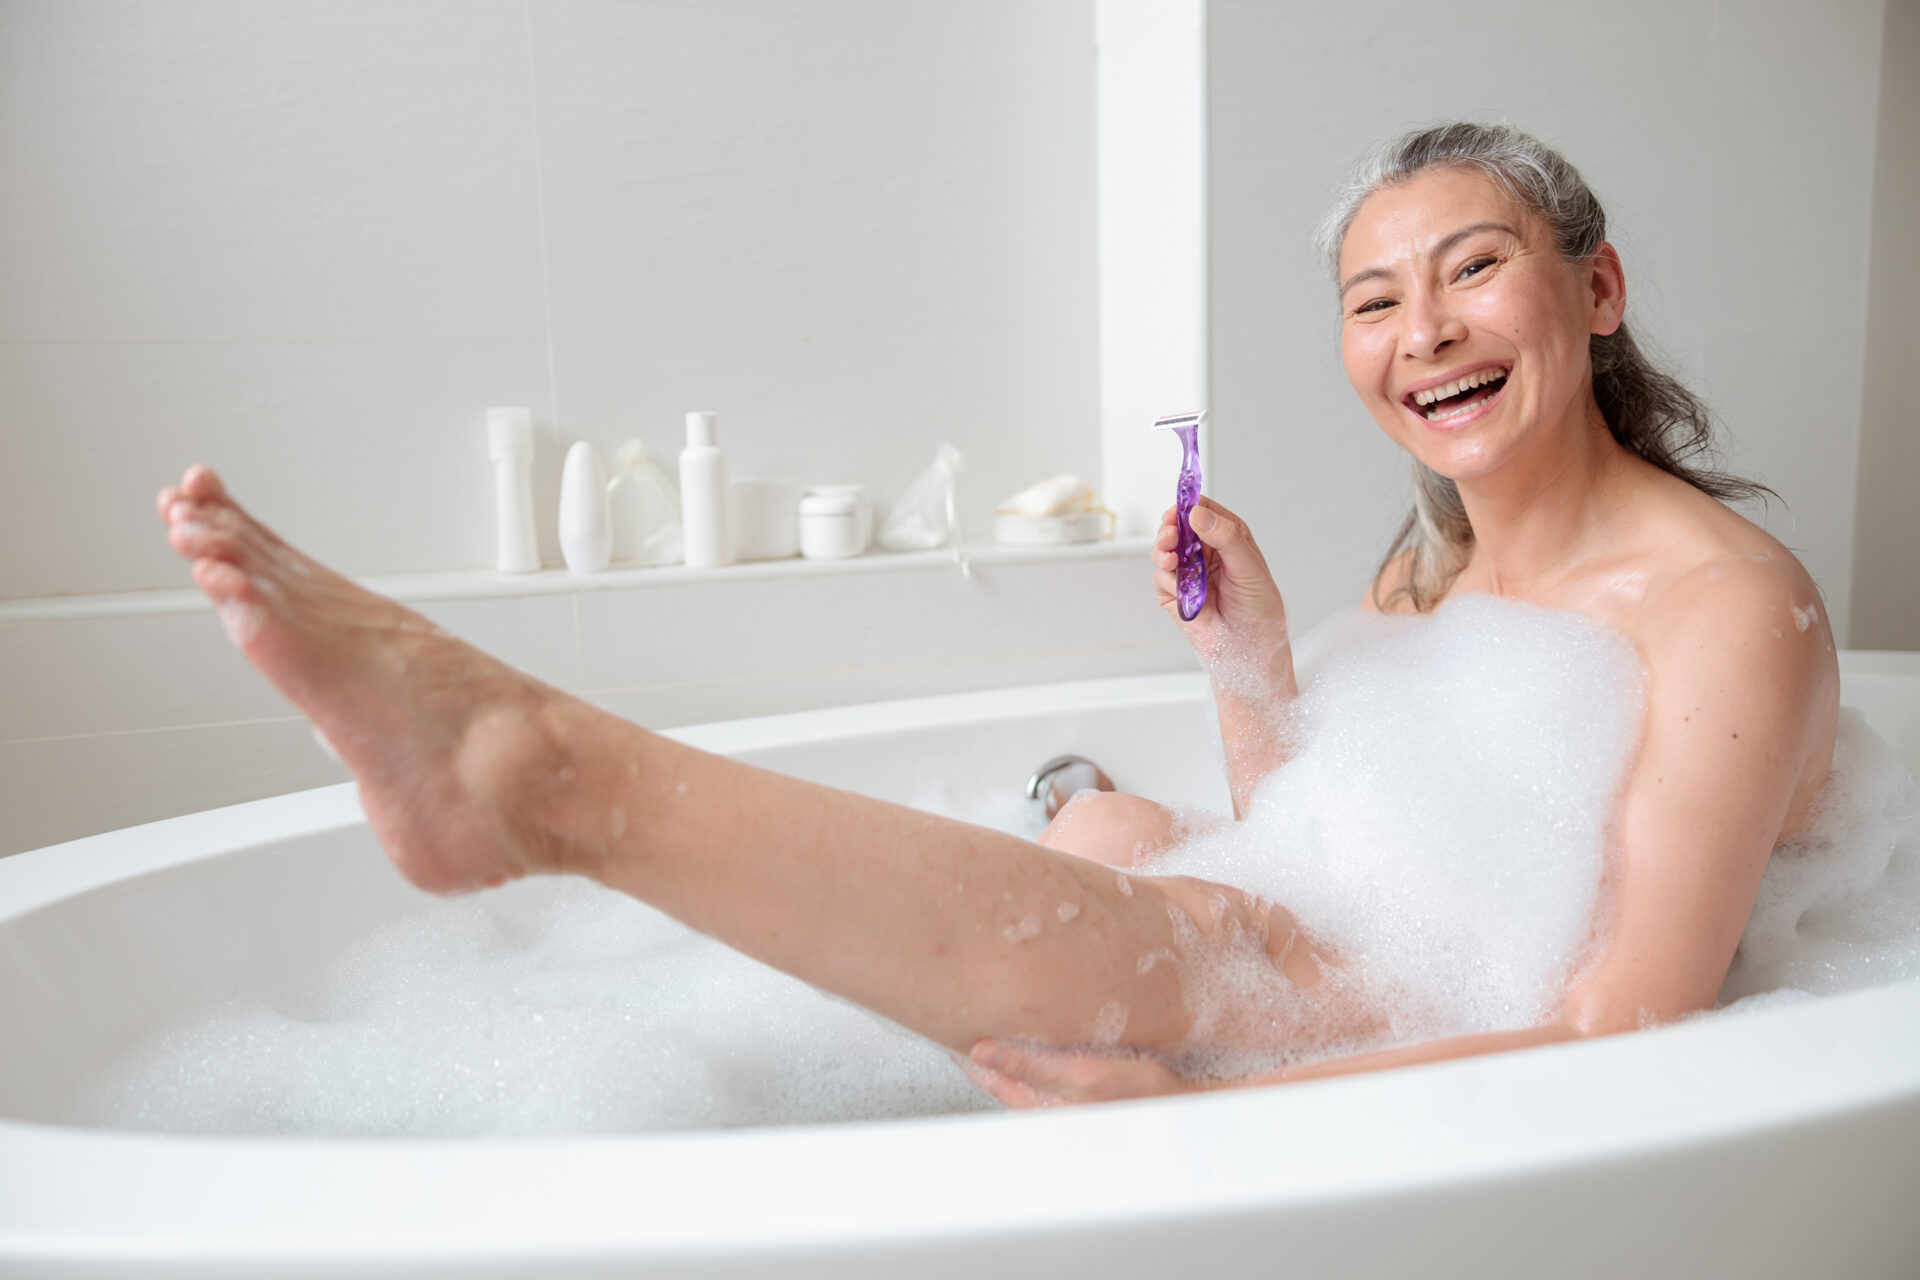 Femme dans son bain qui va se raser les jambes